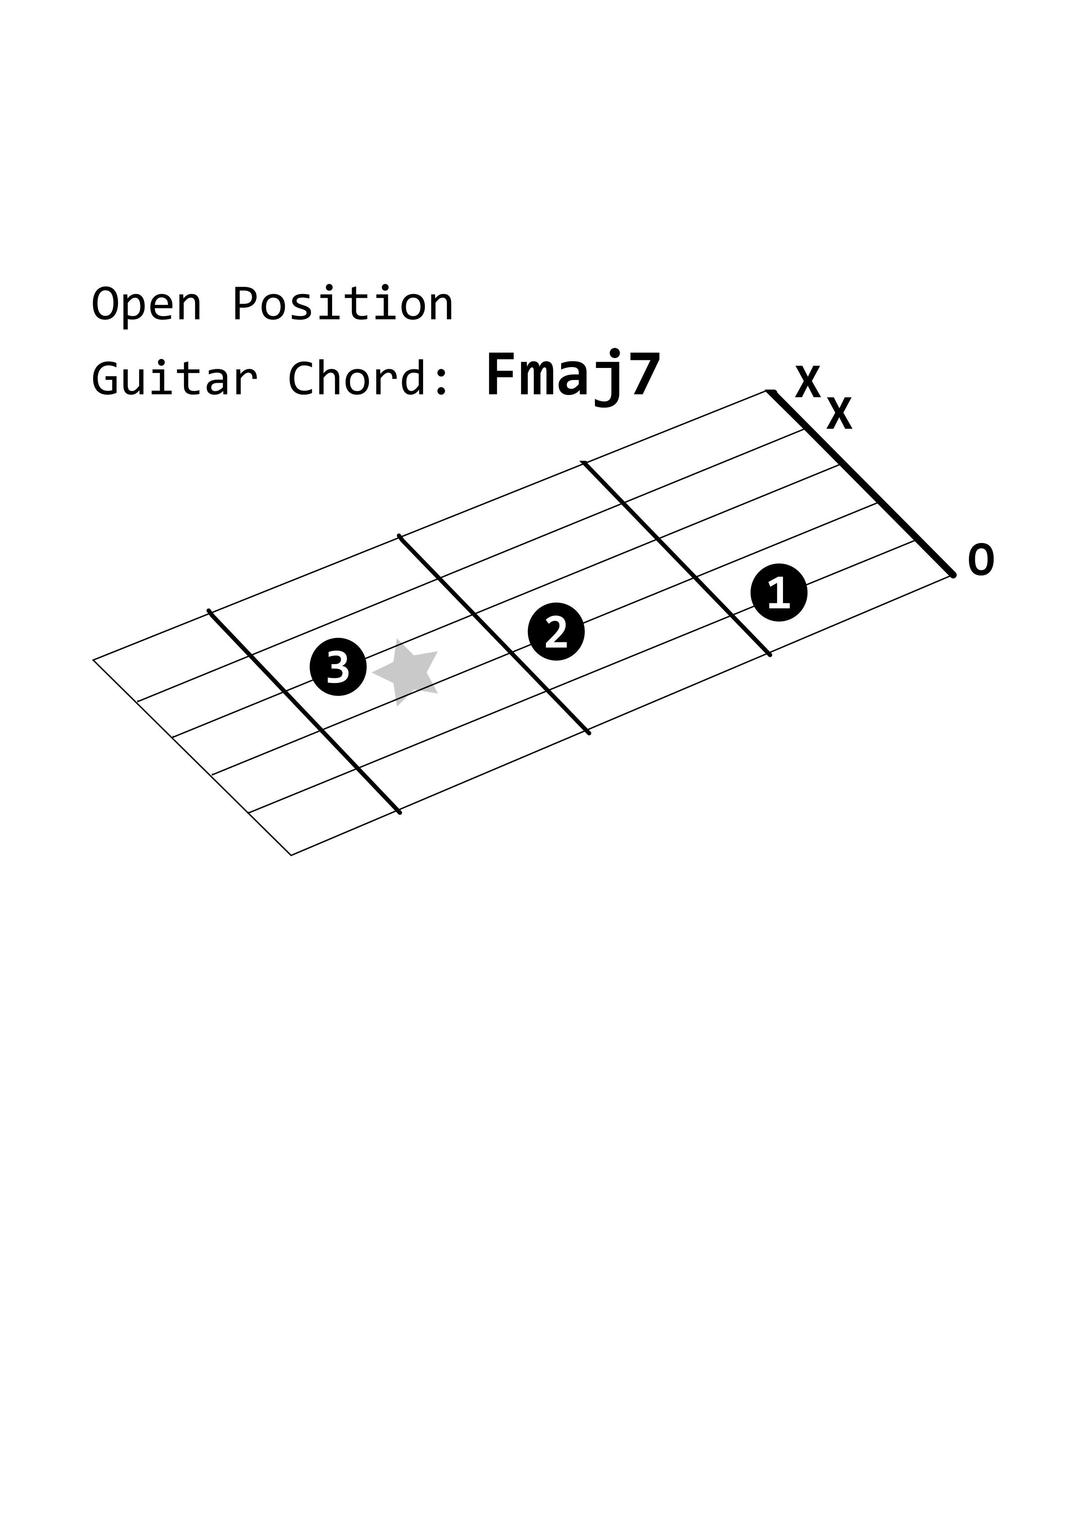 Open Position Guitar Chord: Fmaj7 png transparent